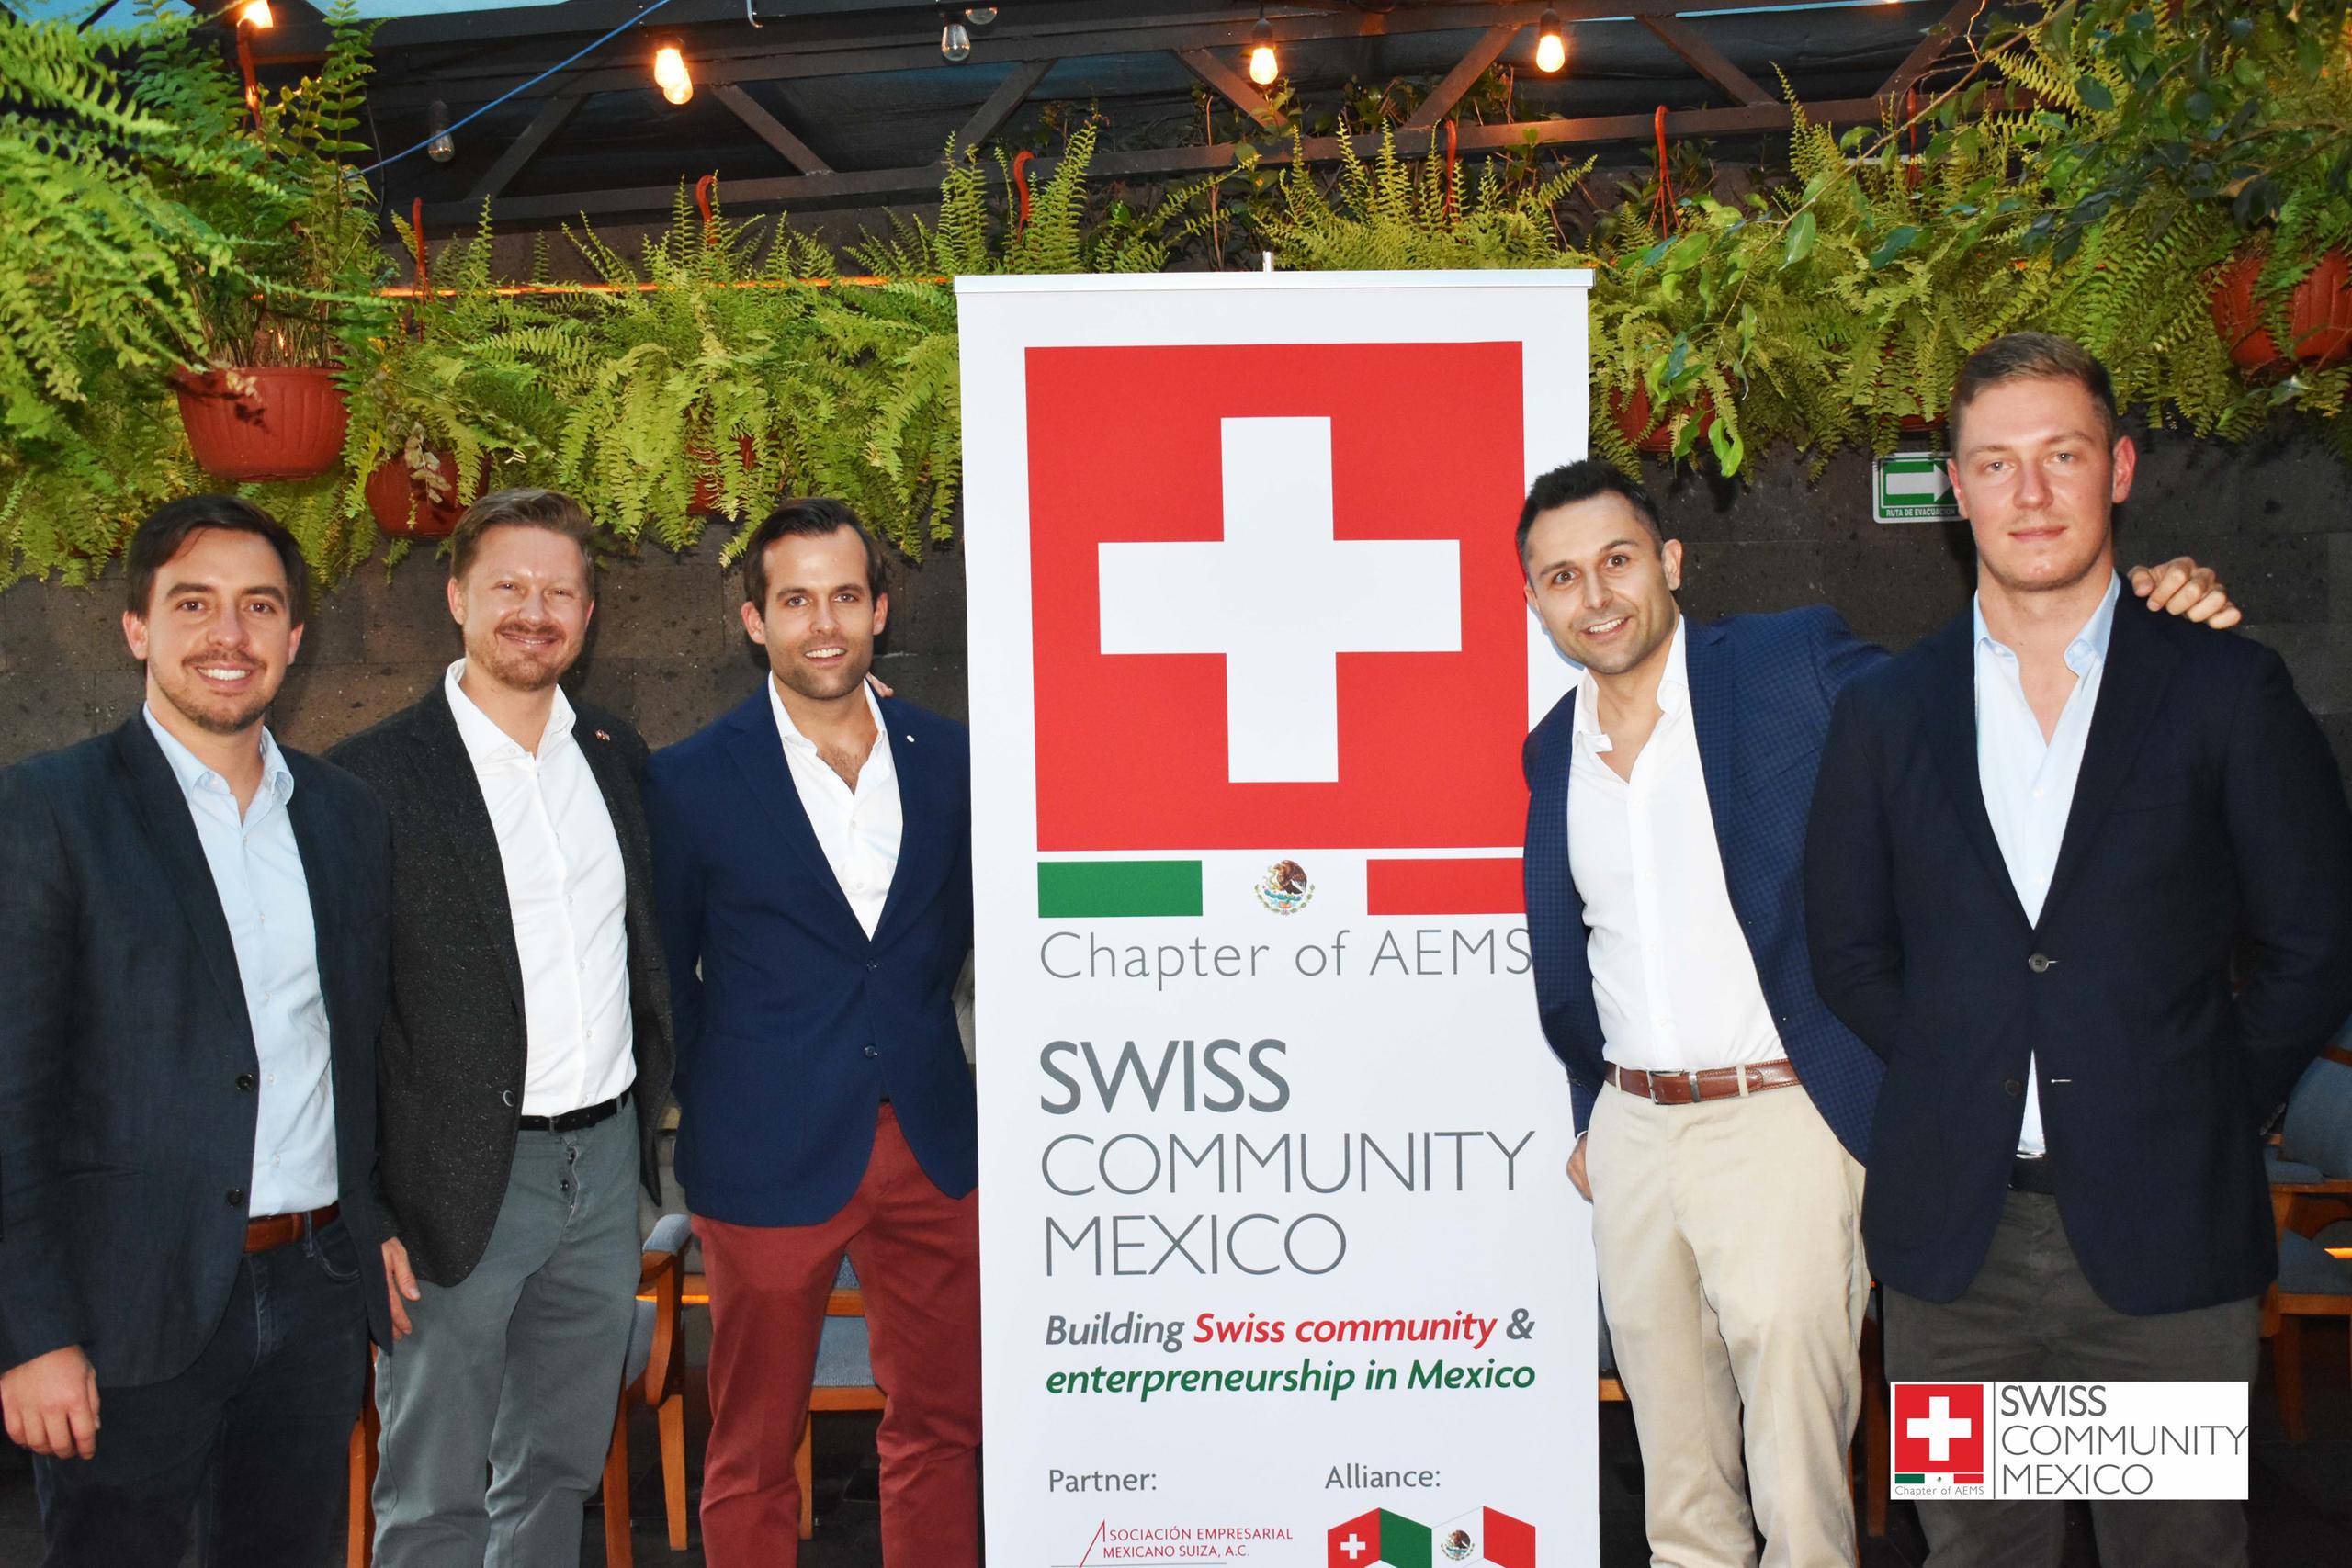 Swiss Community Mexico